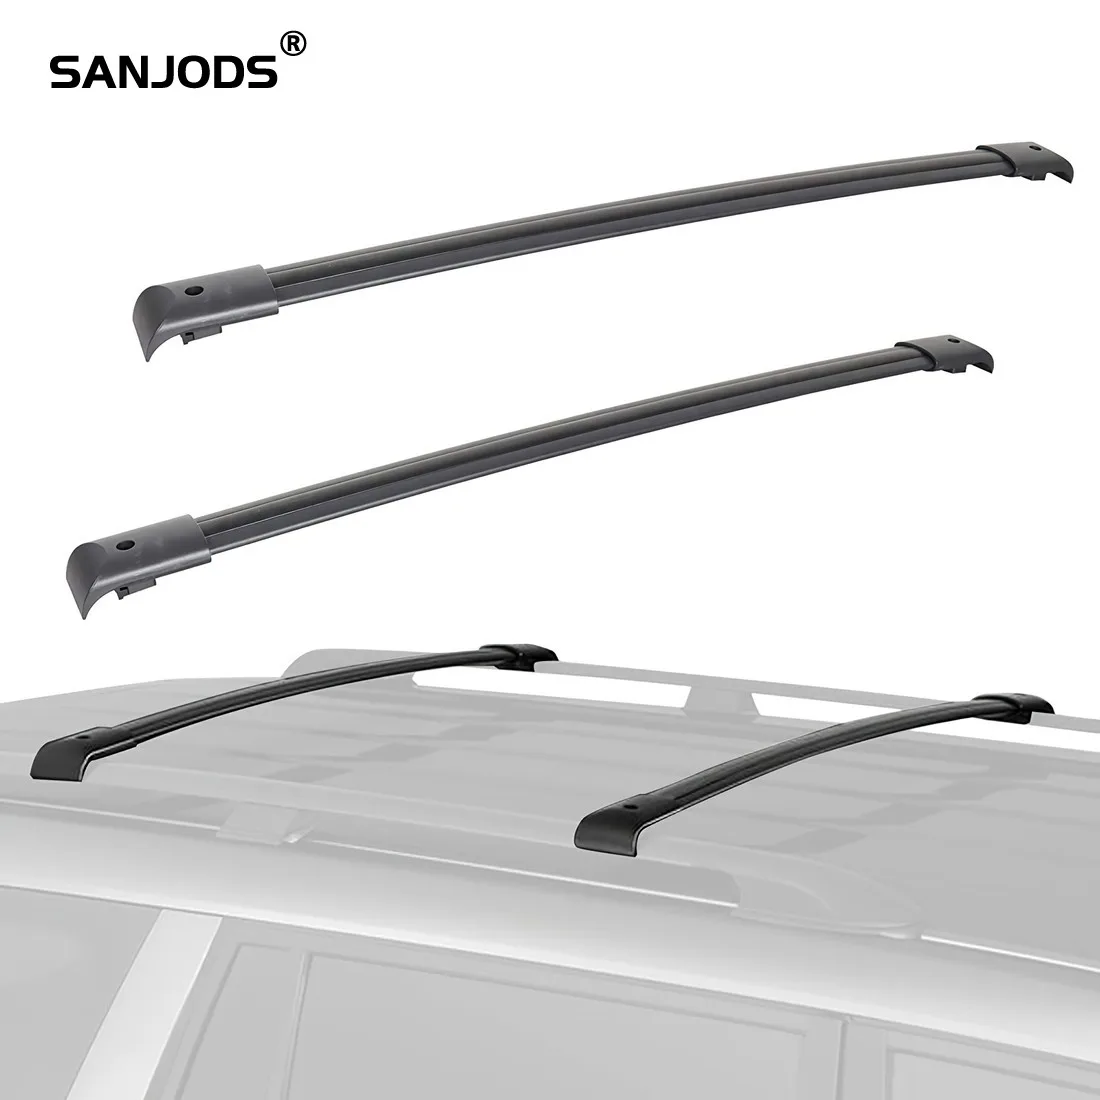 SANJODS Car Roof Rack Replacement For Honda Pilot 2003 2004 2005 2006 2007 2008 Bolt-On Top Rail Rack Cross Bar Luggage Carrier